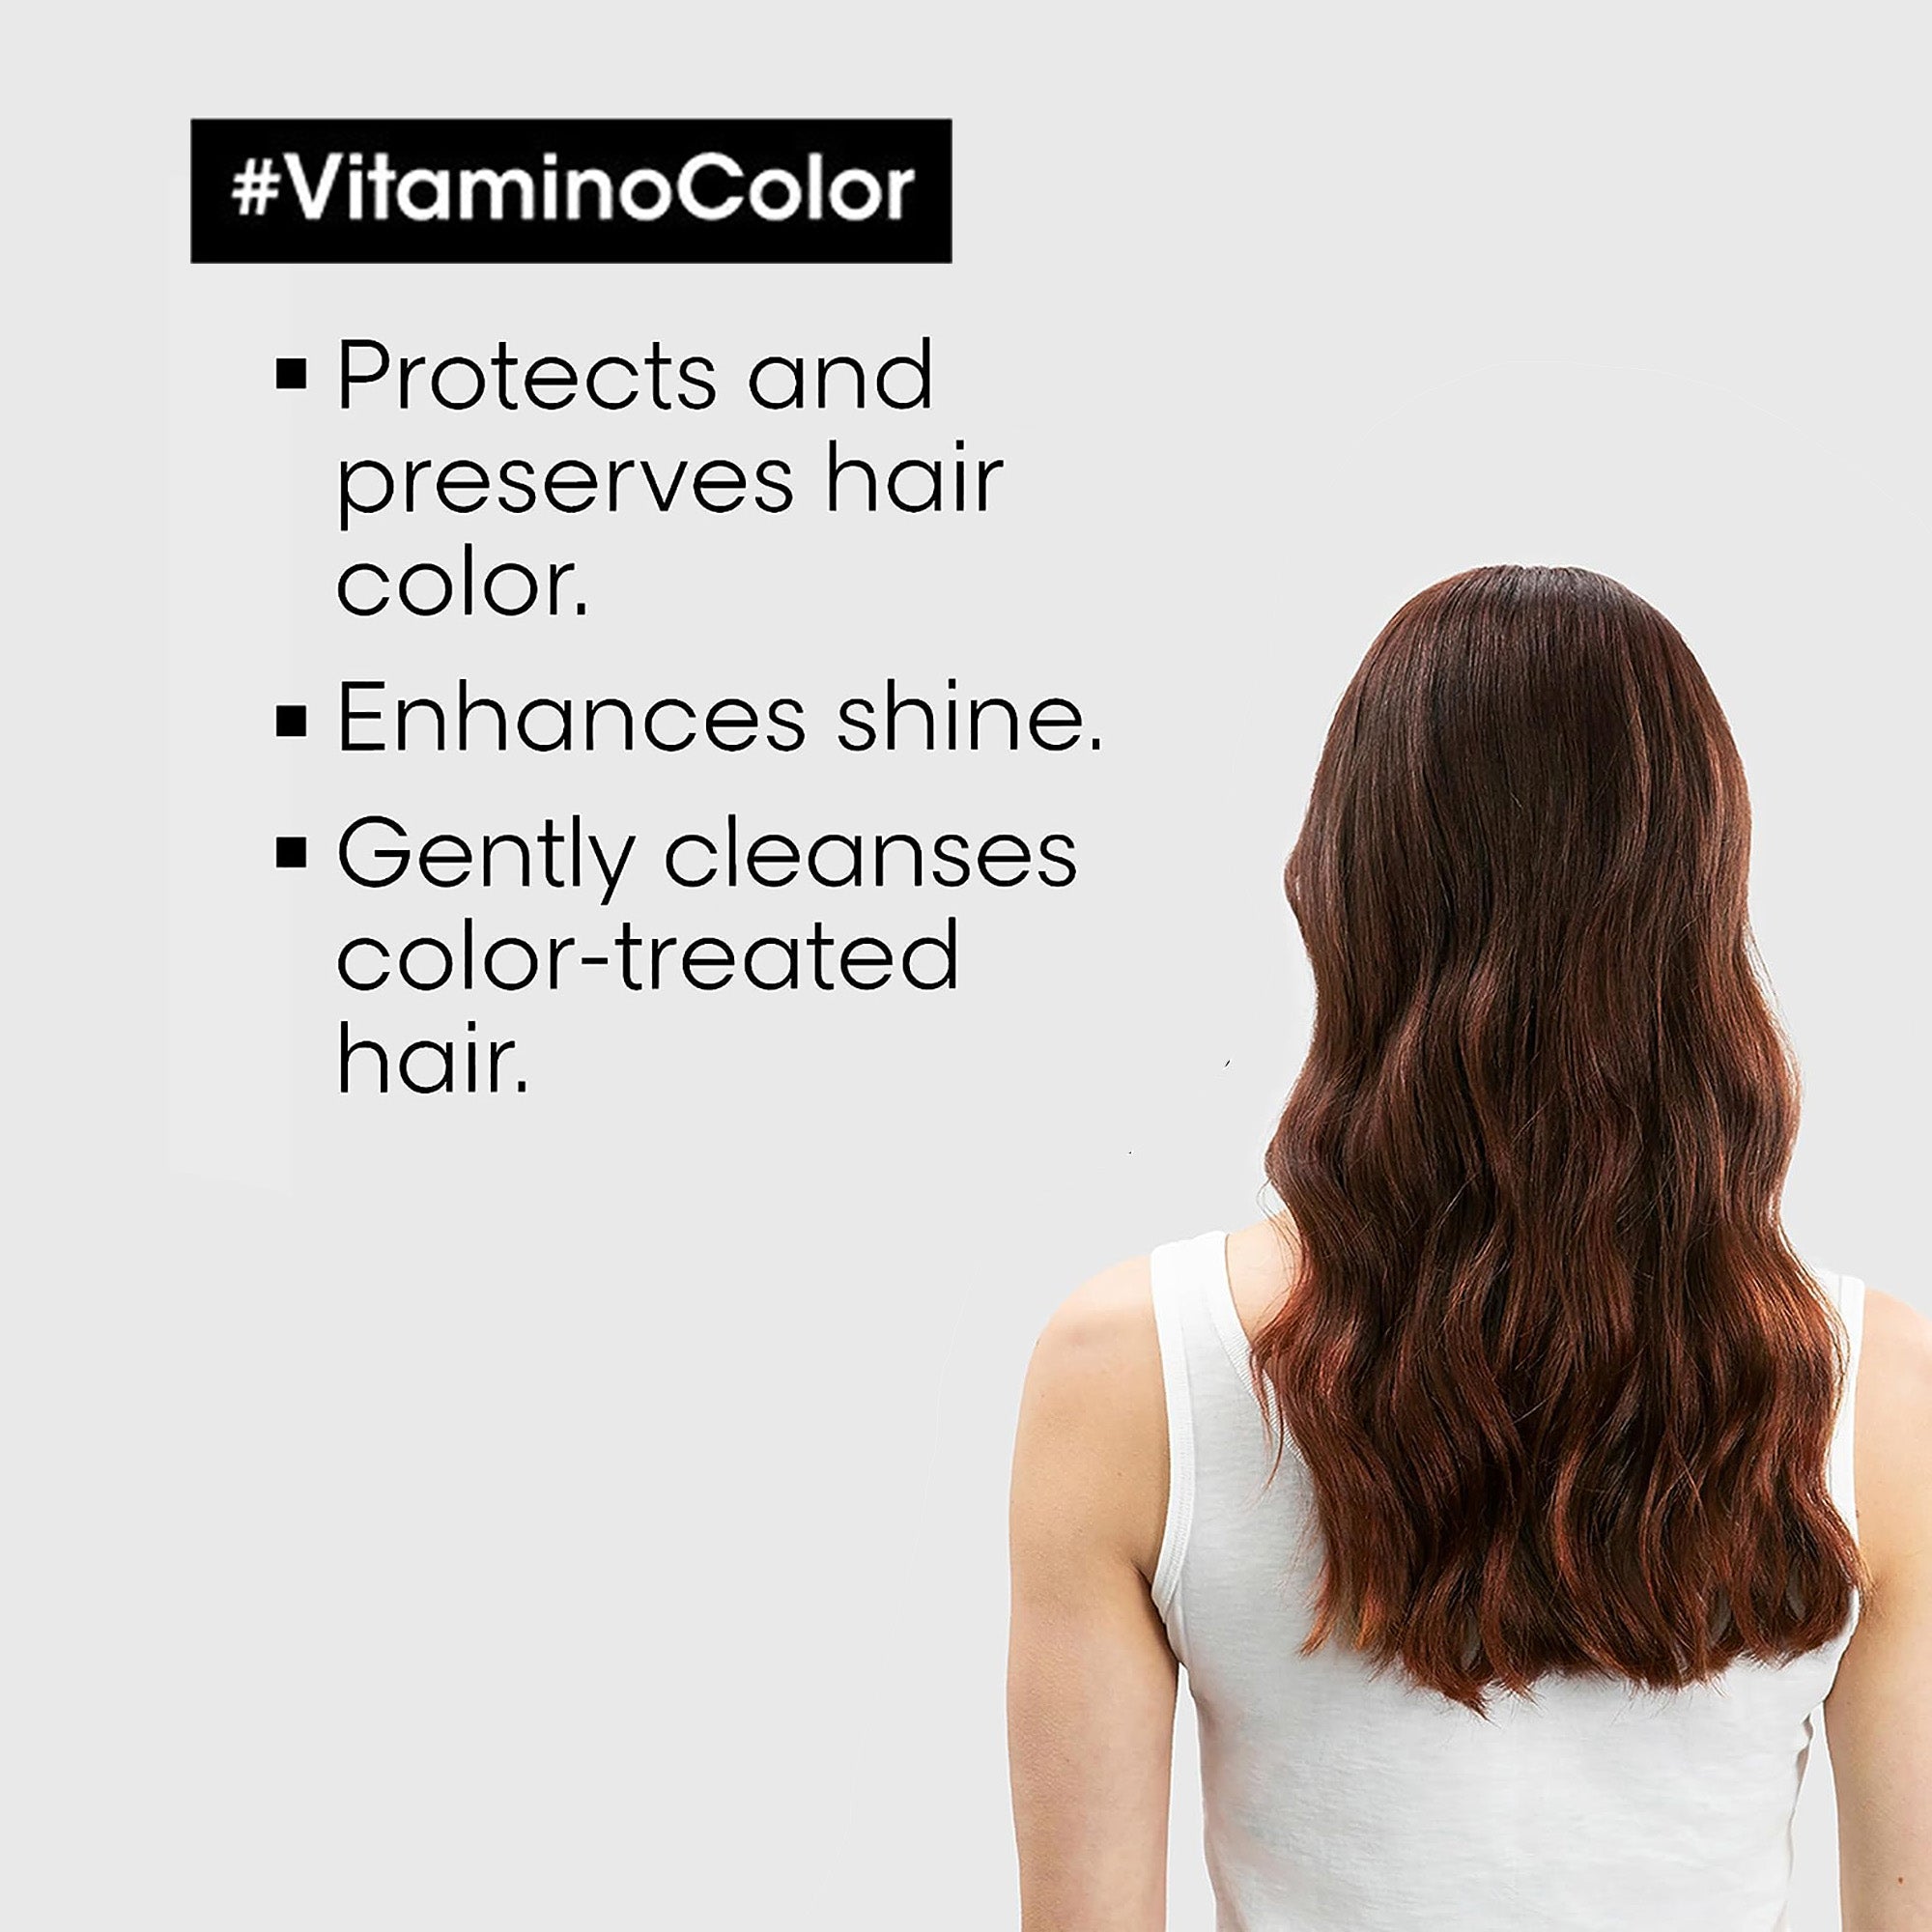 L'Oreal Serie Expert Vitamino Color Radiance Shampoo - 16oz / 16.OZ